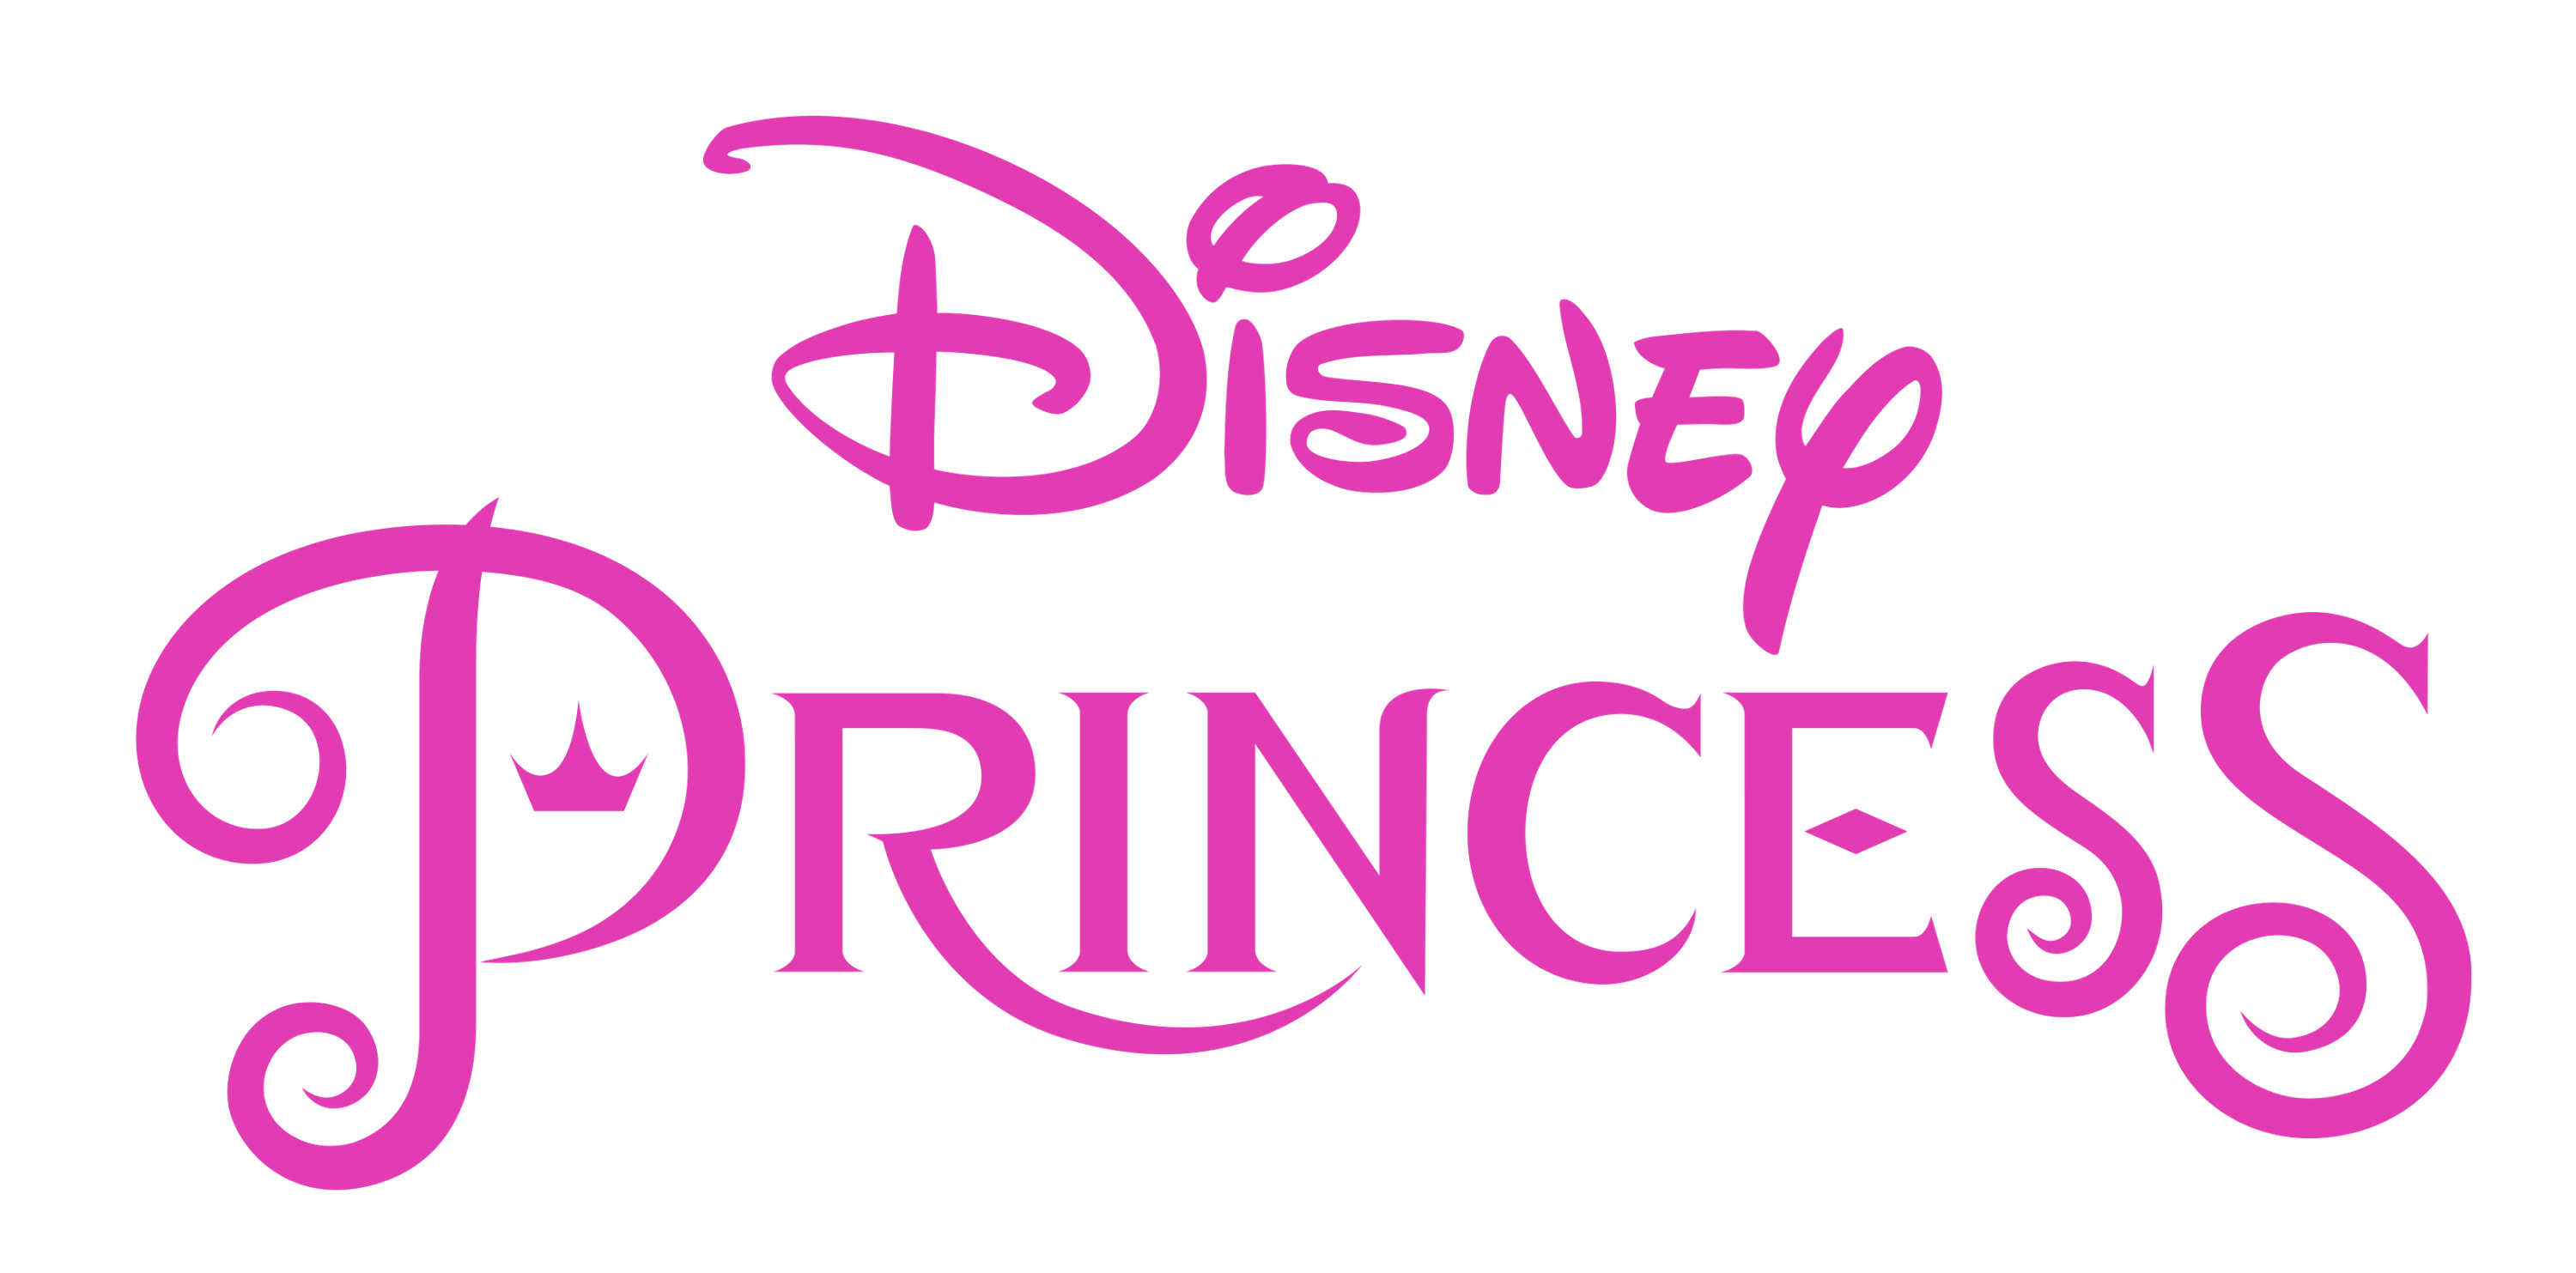 Disney princess logo